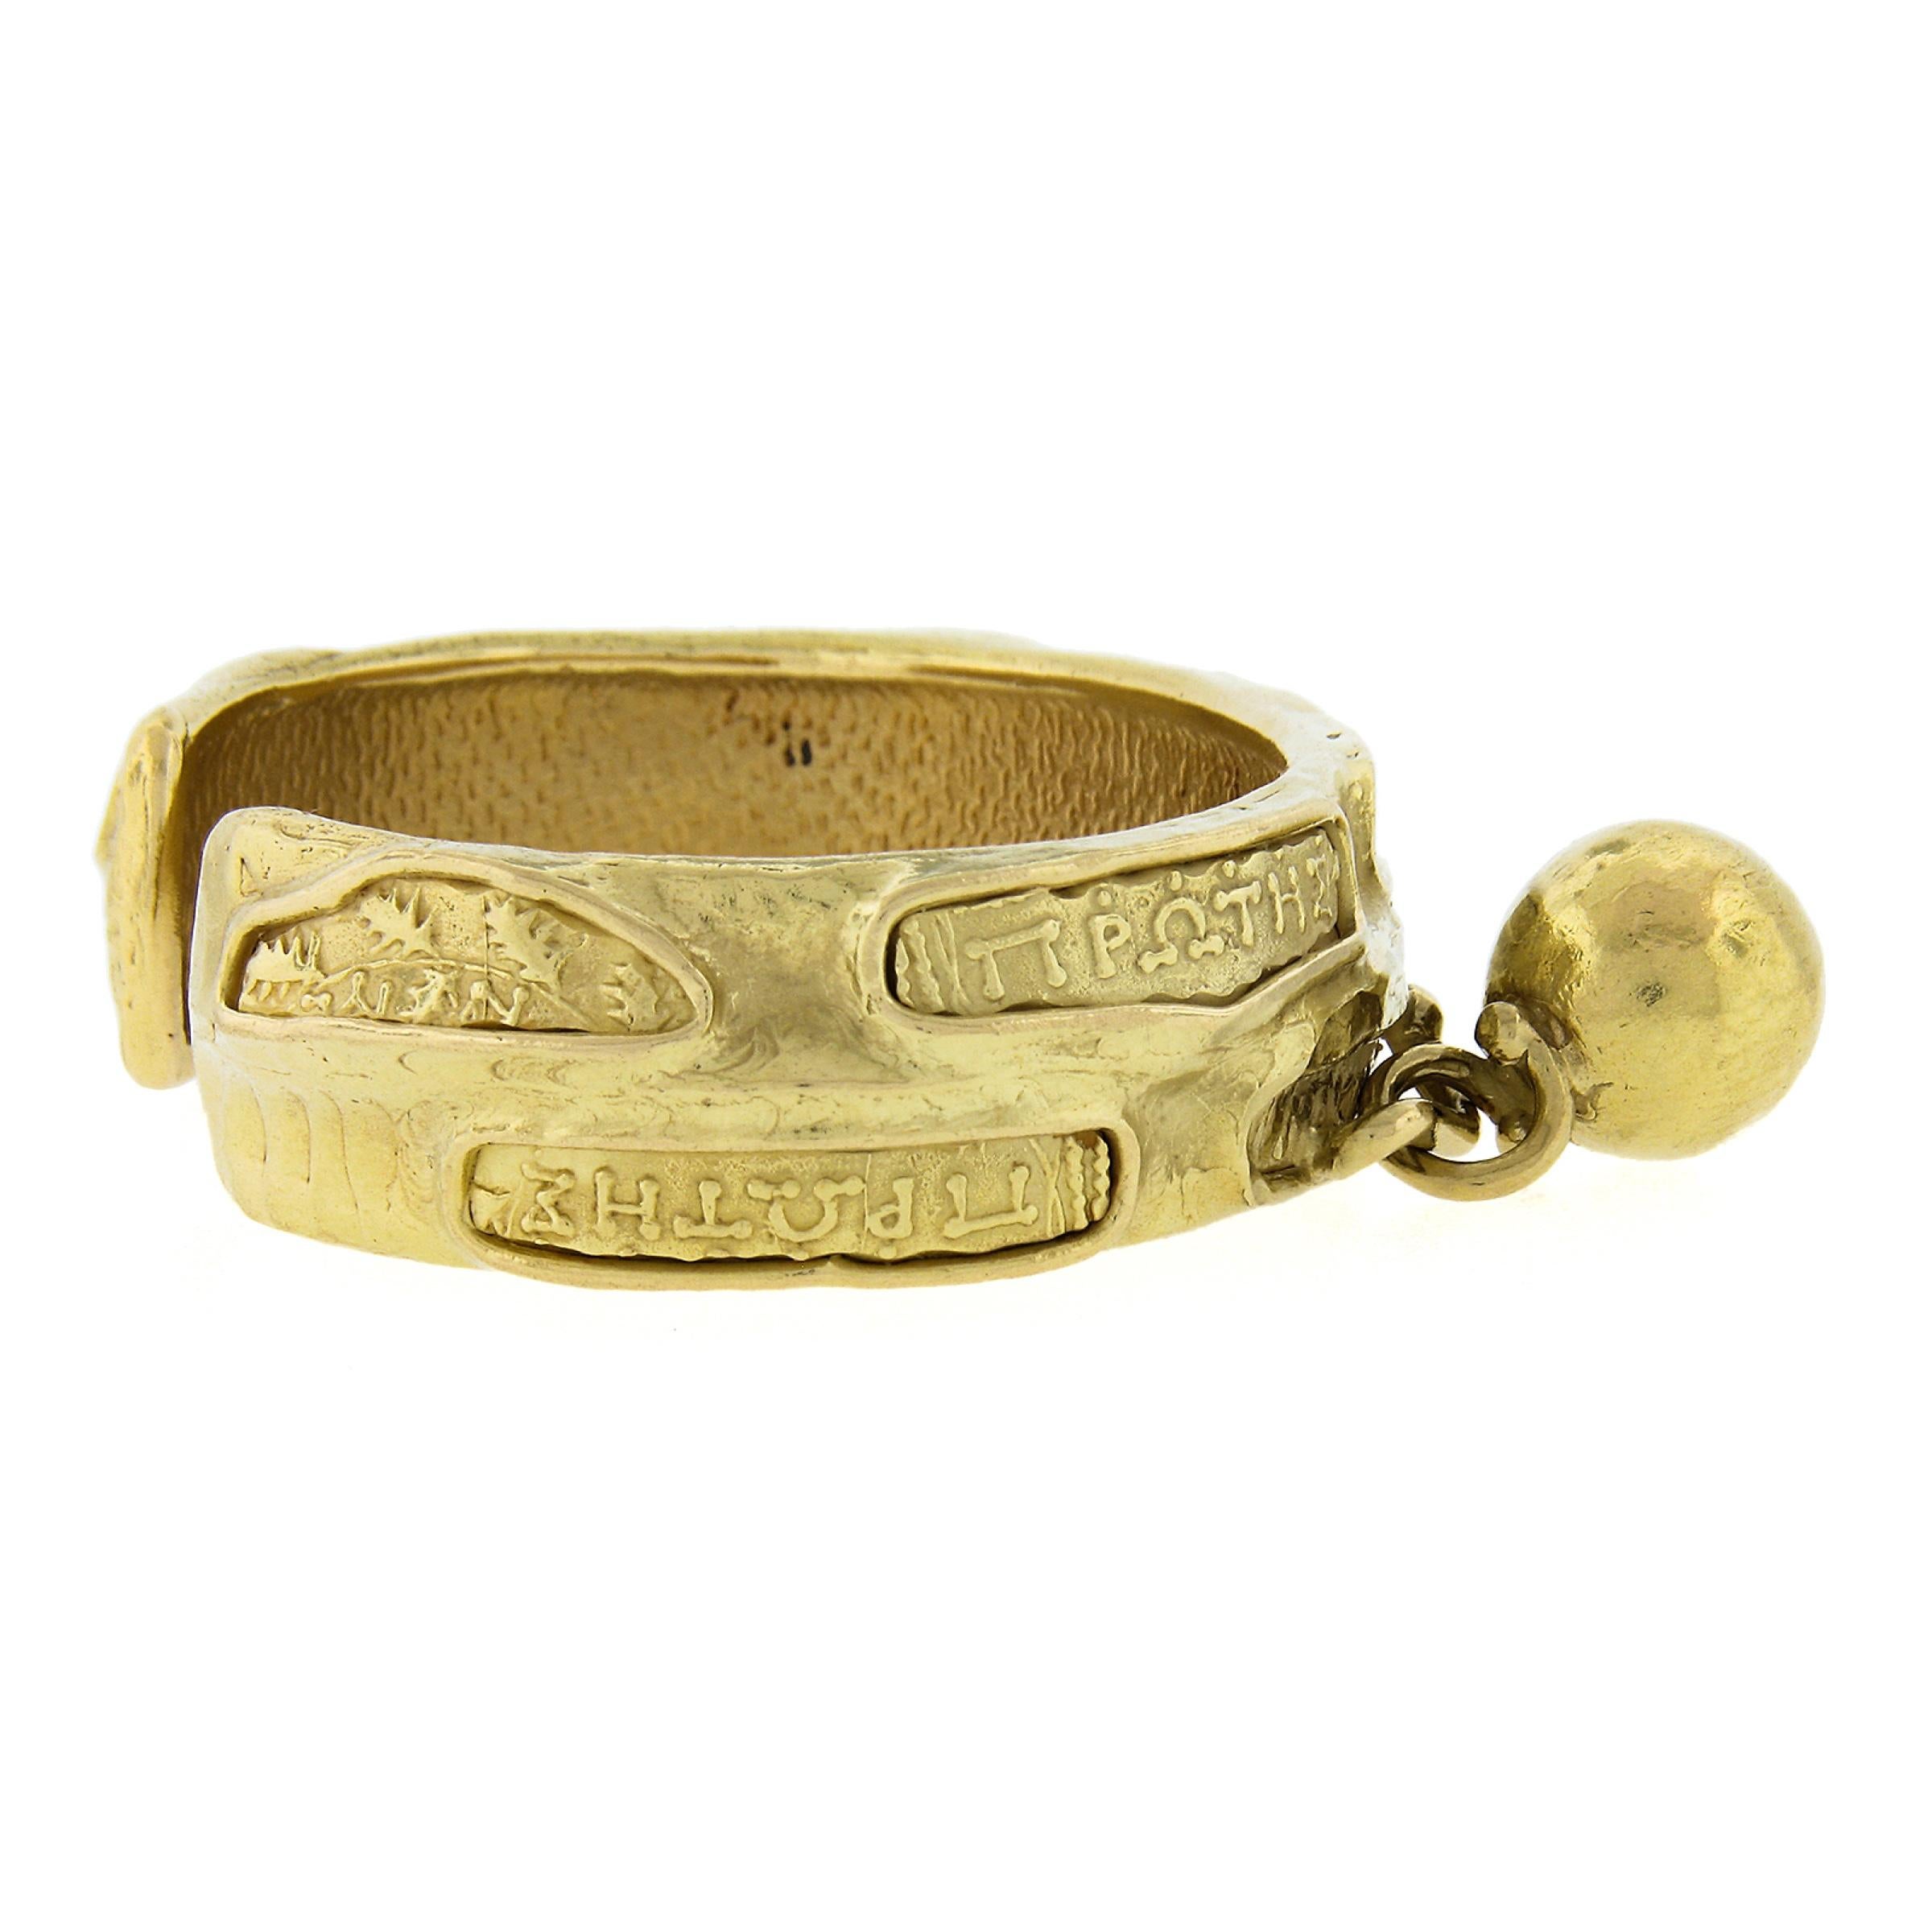 Denise Roberge 18k Yellow Gold Greek Writing Open Cuff Bracelet w/ Dangle Ball For Sale 1